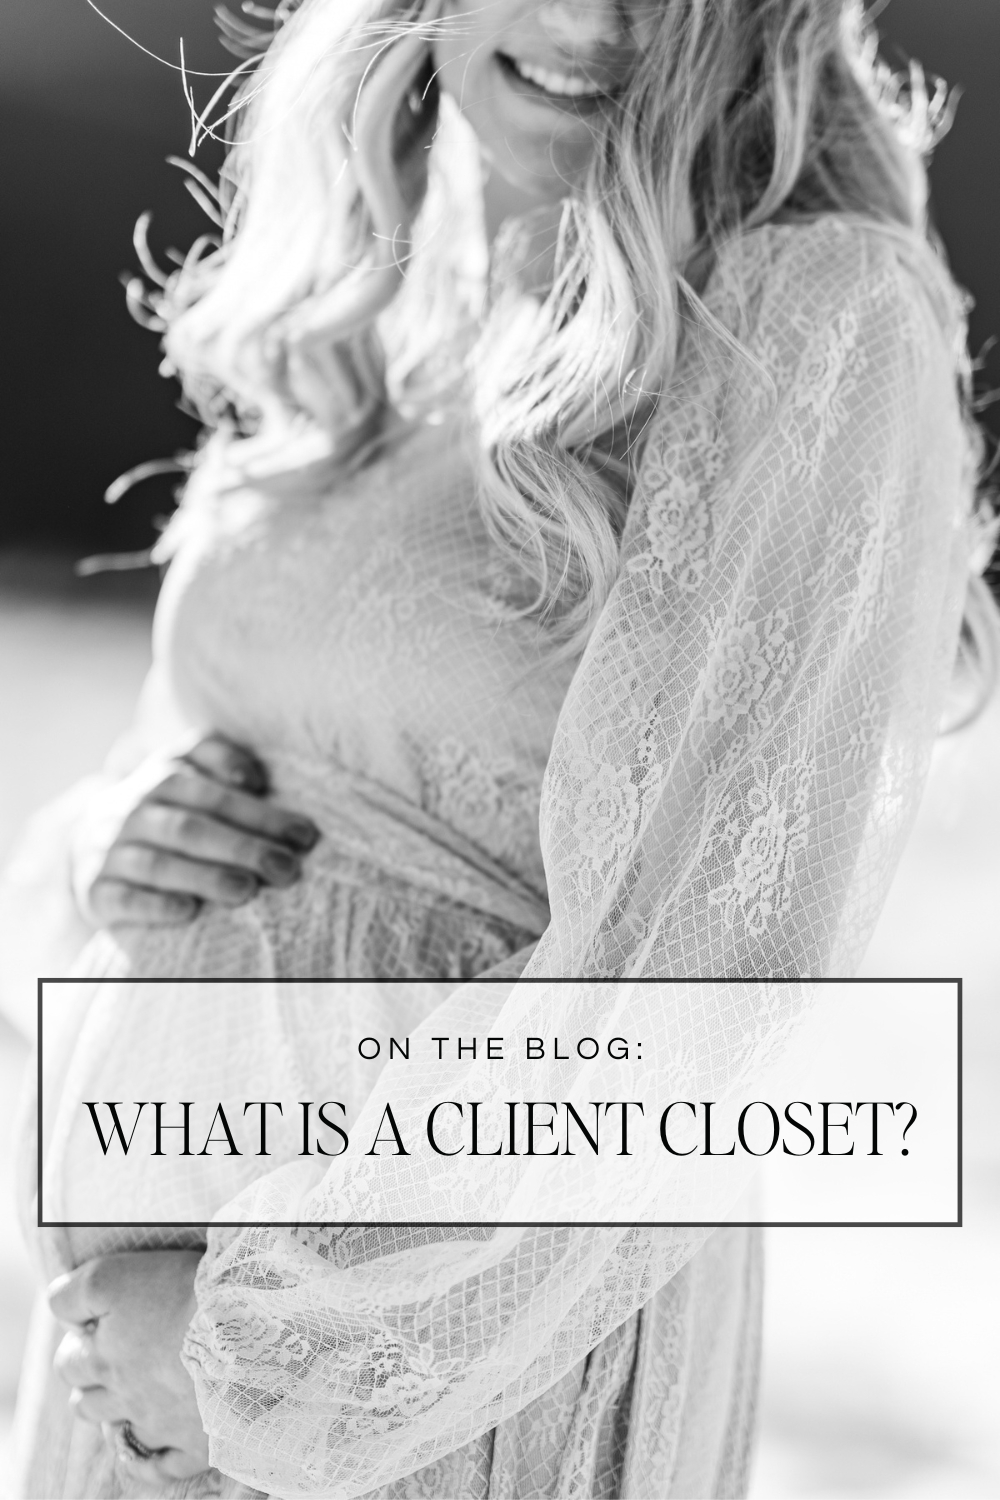 What is a client closet?